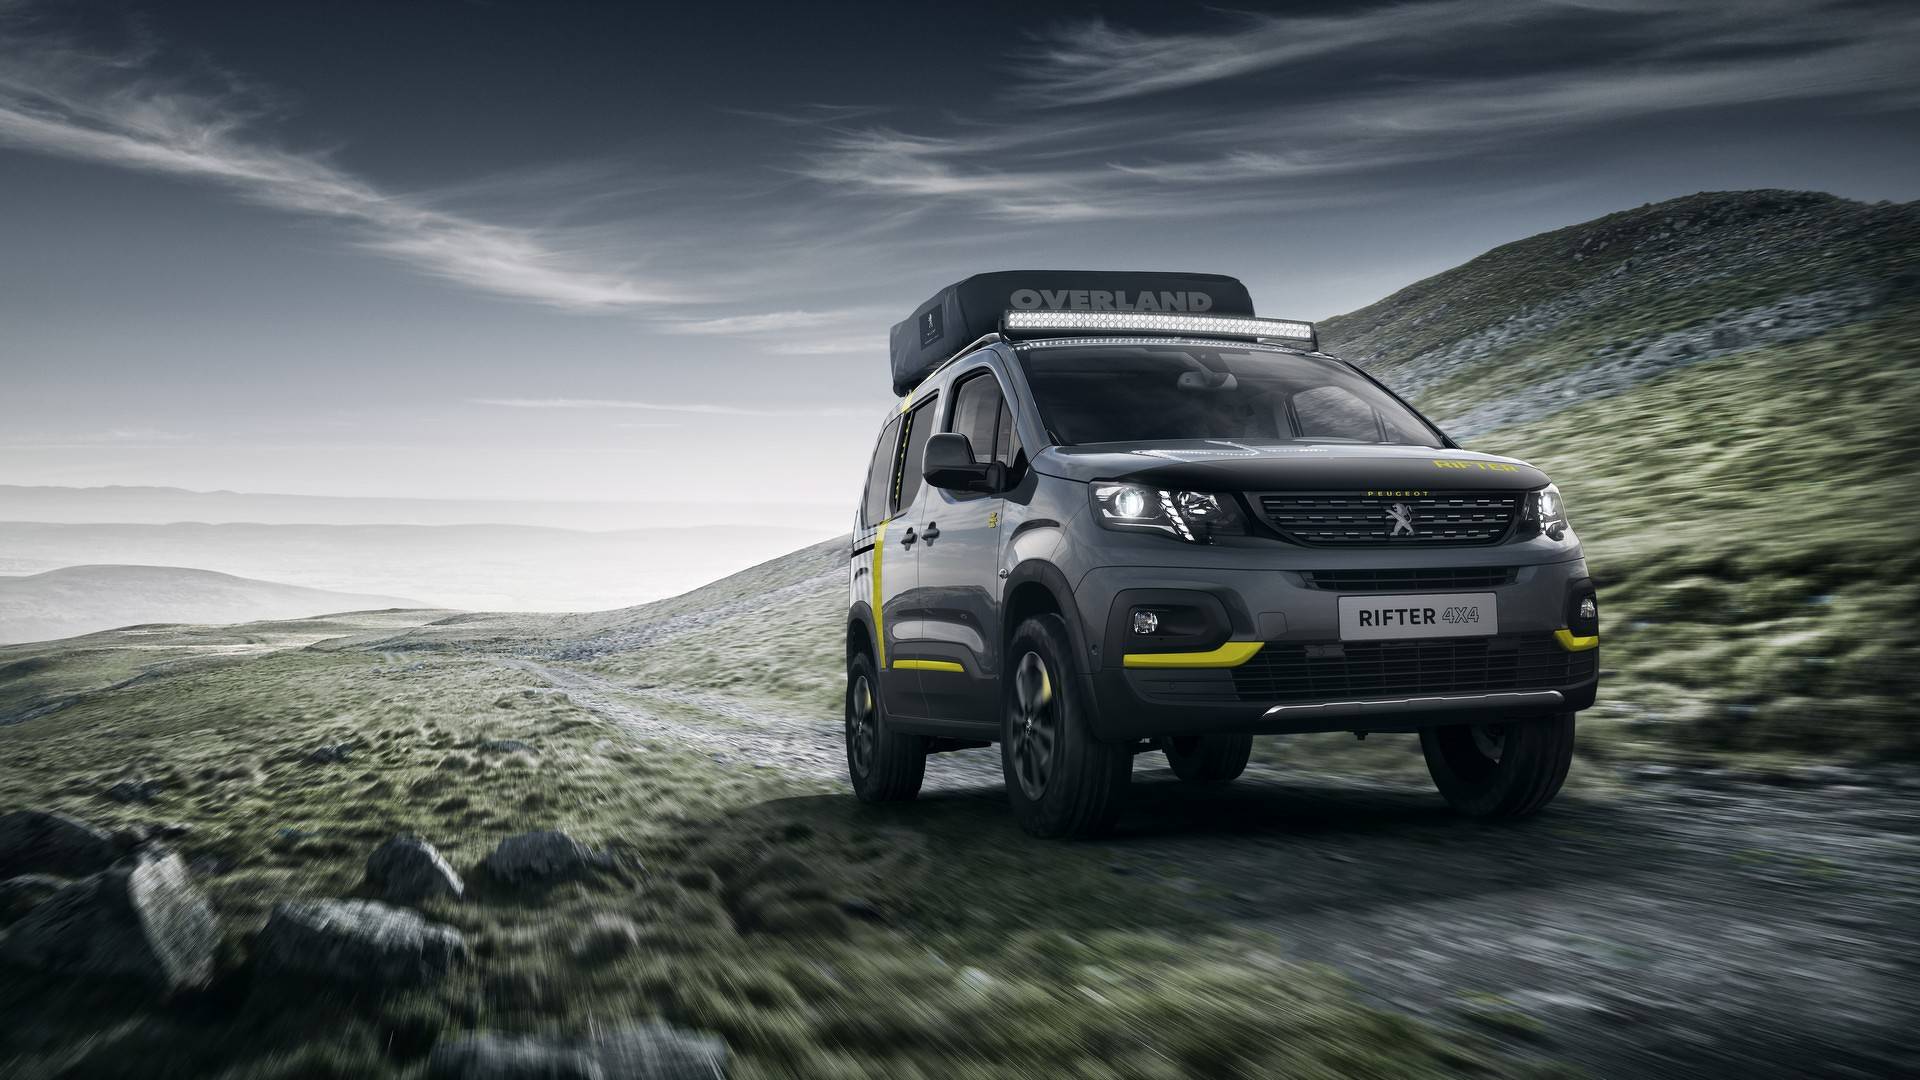 Peugeot Rifter 4x4 Concept: Στην περιπετειώδη πλευρά των vans